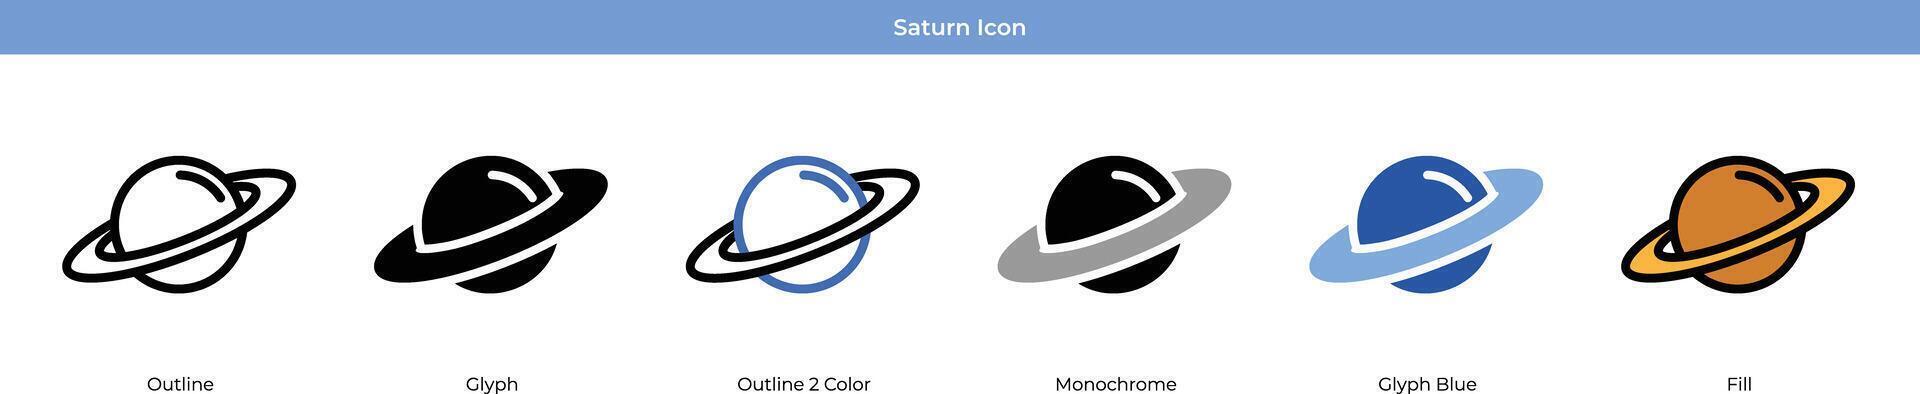 Saturno icono conjunto vector